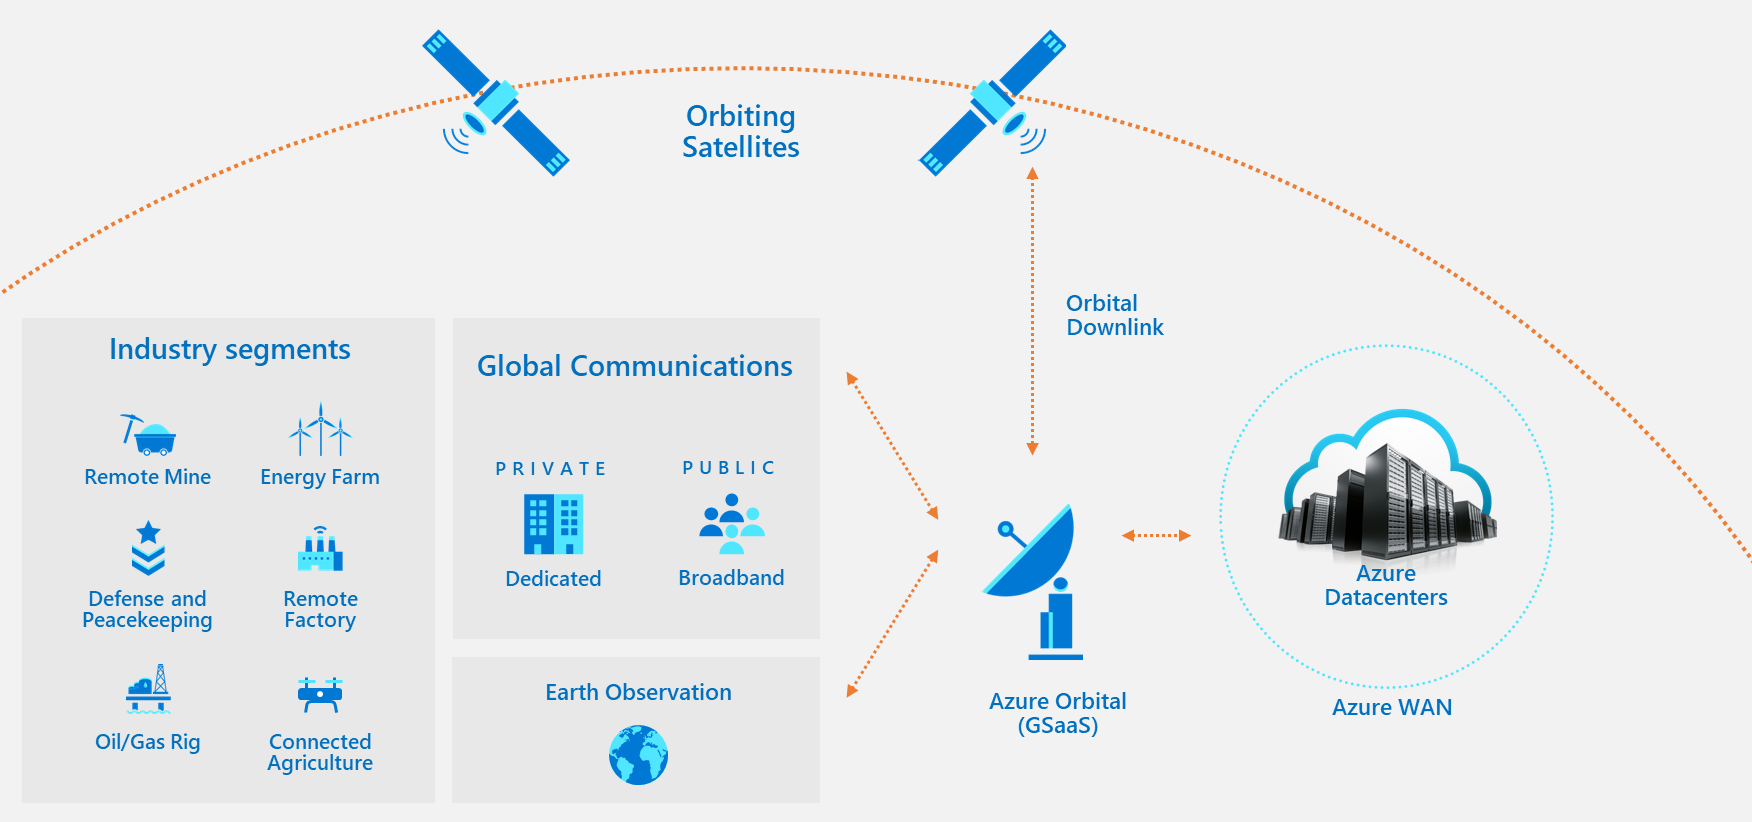 Azure Orbital Ground Station overview